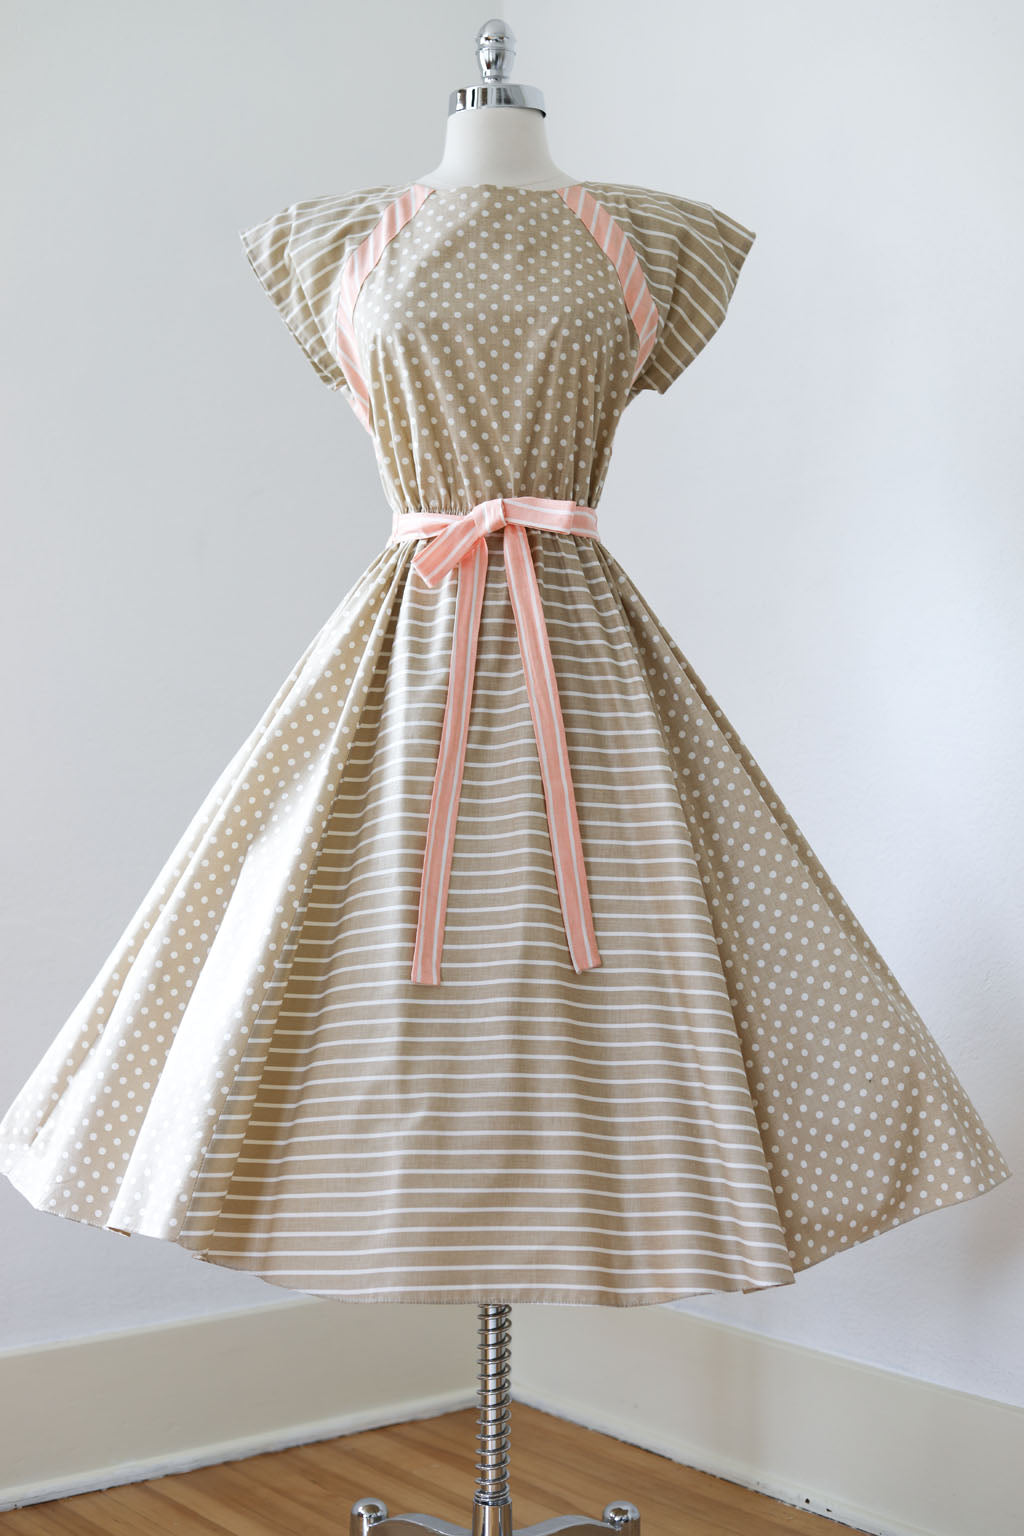 Vintage 1980s Dress - Soft Sand + Peach New Wave Cotton Sundress w Rear Criss-Cross Size M to L